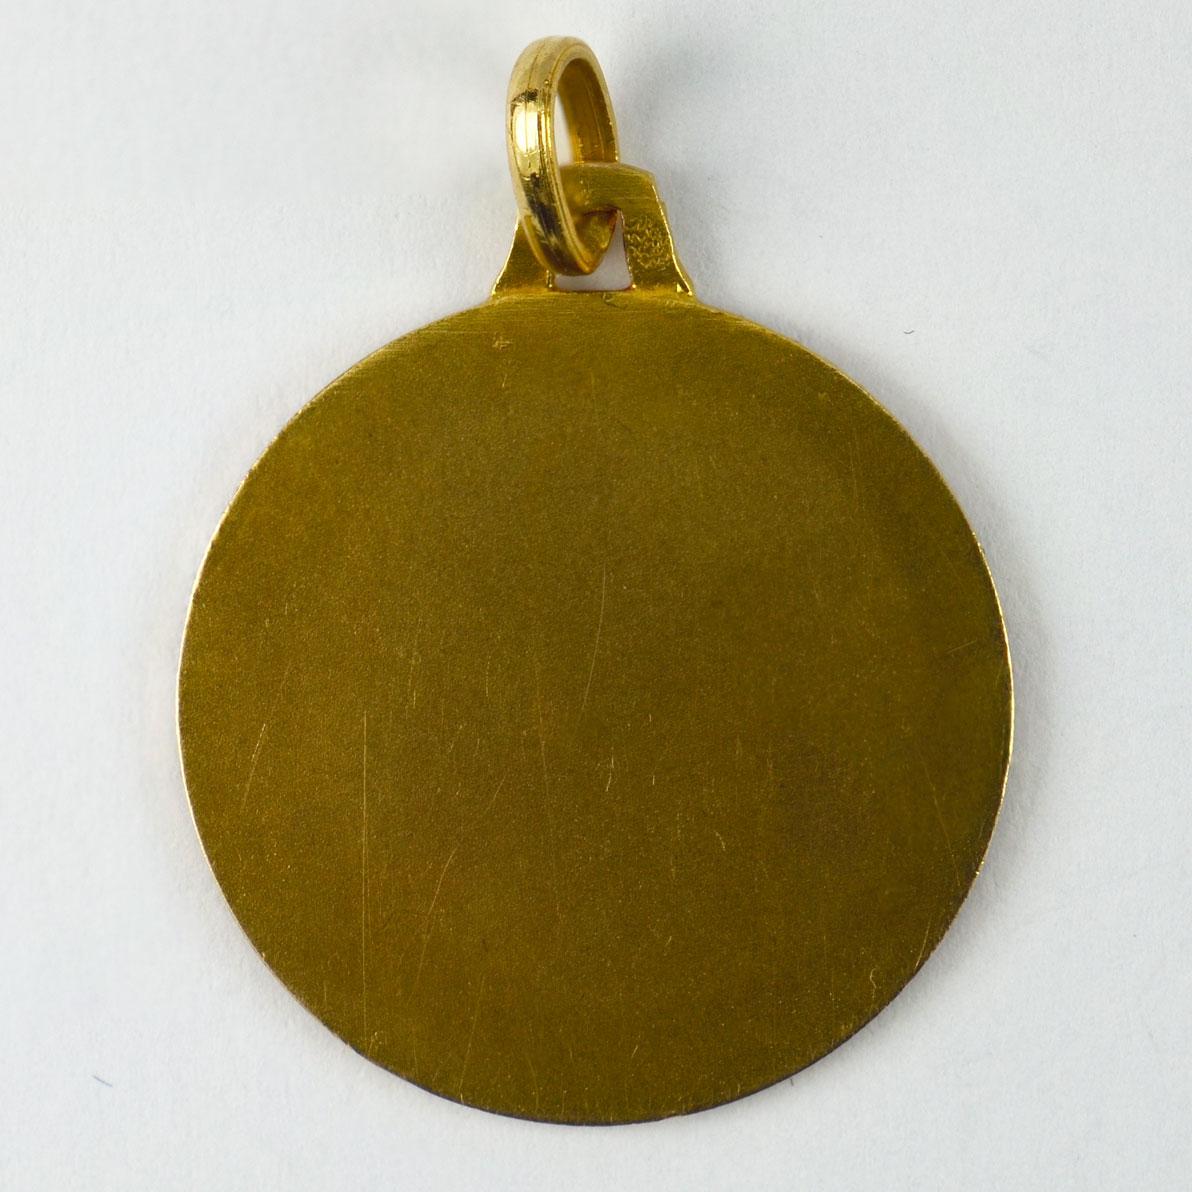 virgin mary gold pendant